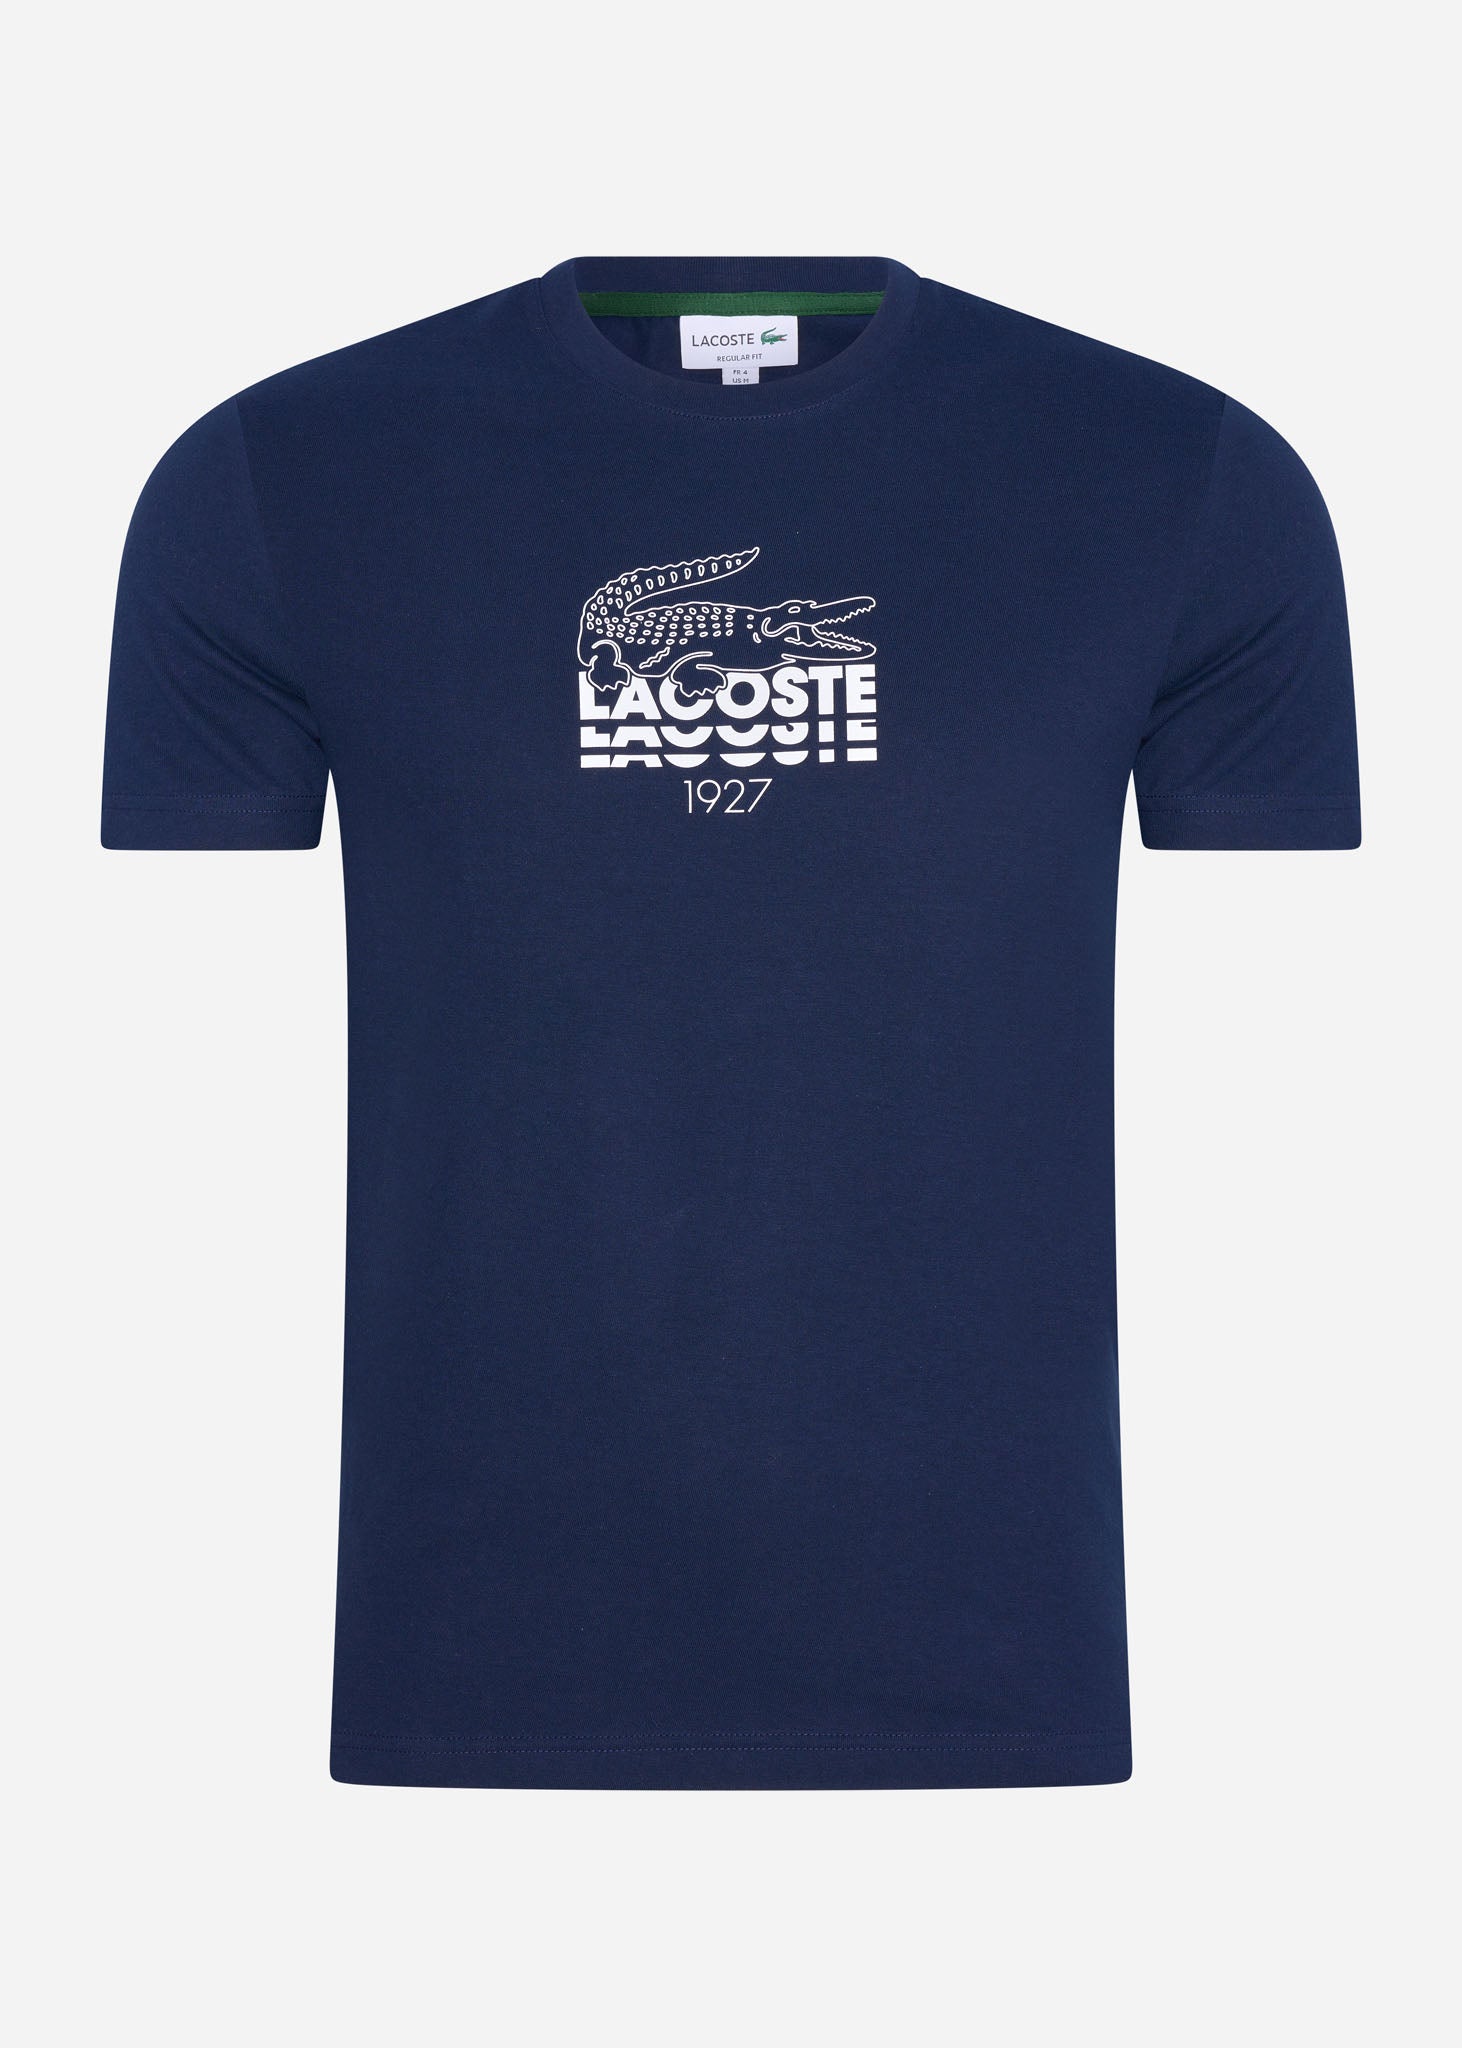 Lacoste T-shirts  Lacoste branding t-shirt - navy blue 